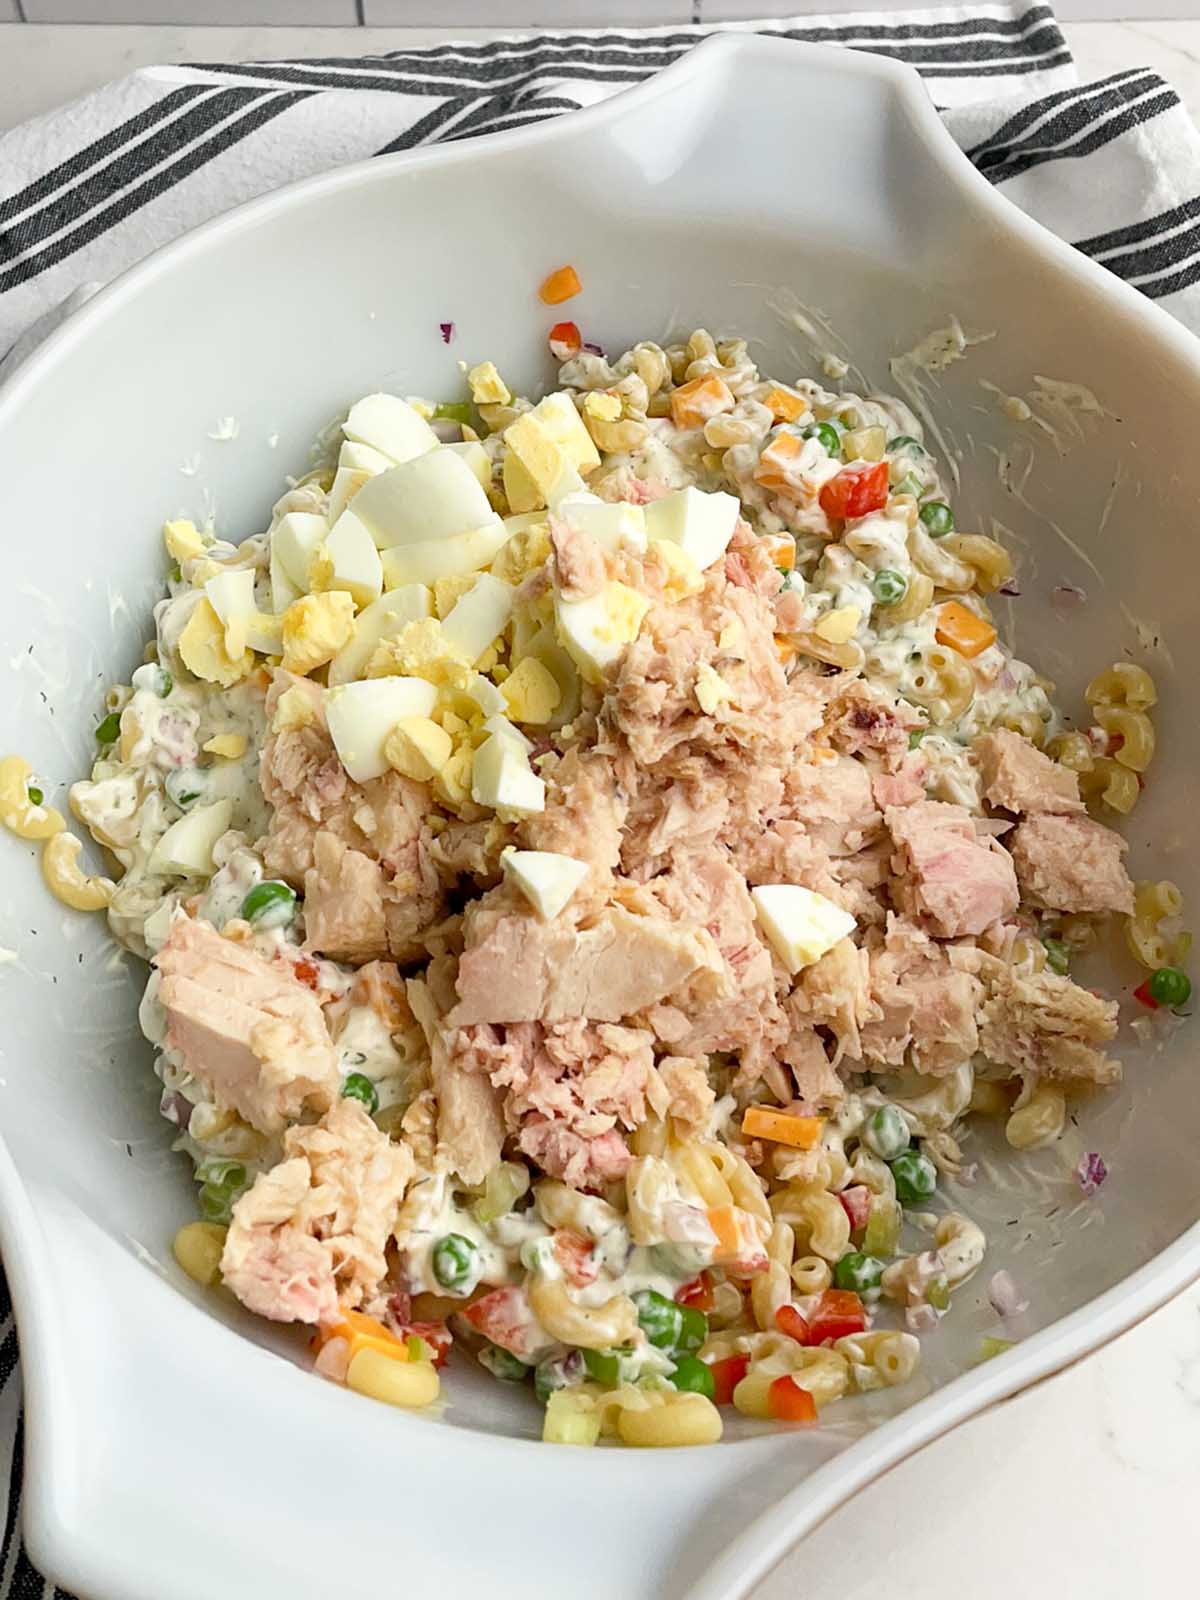 tuna macaroni salad ingredients in a white bowl